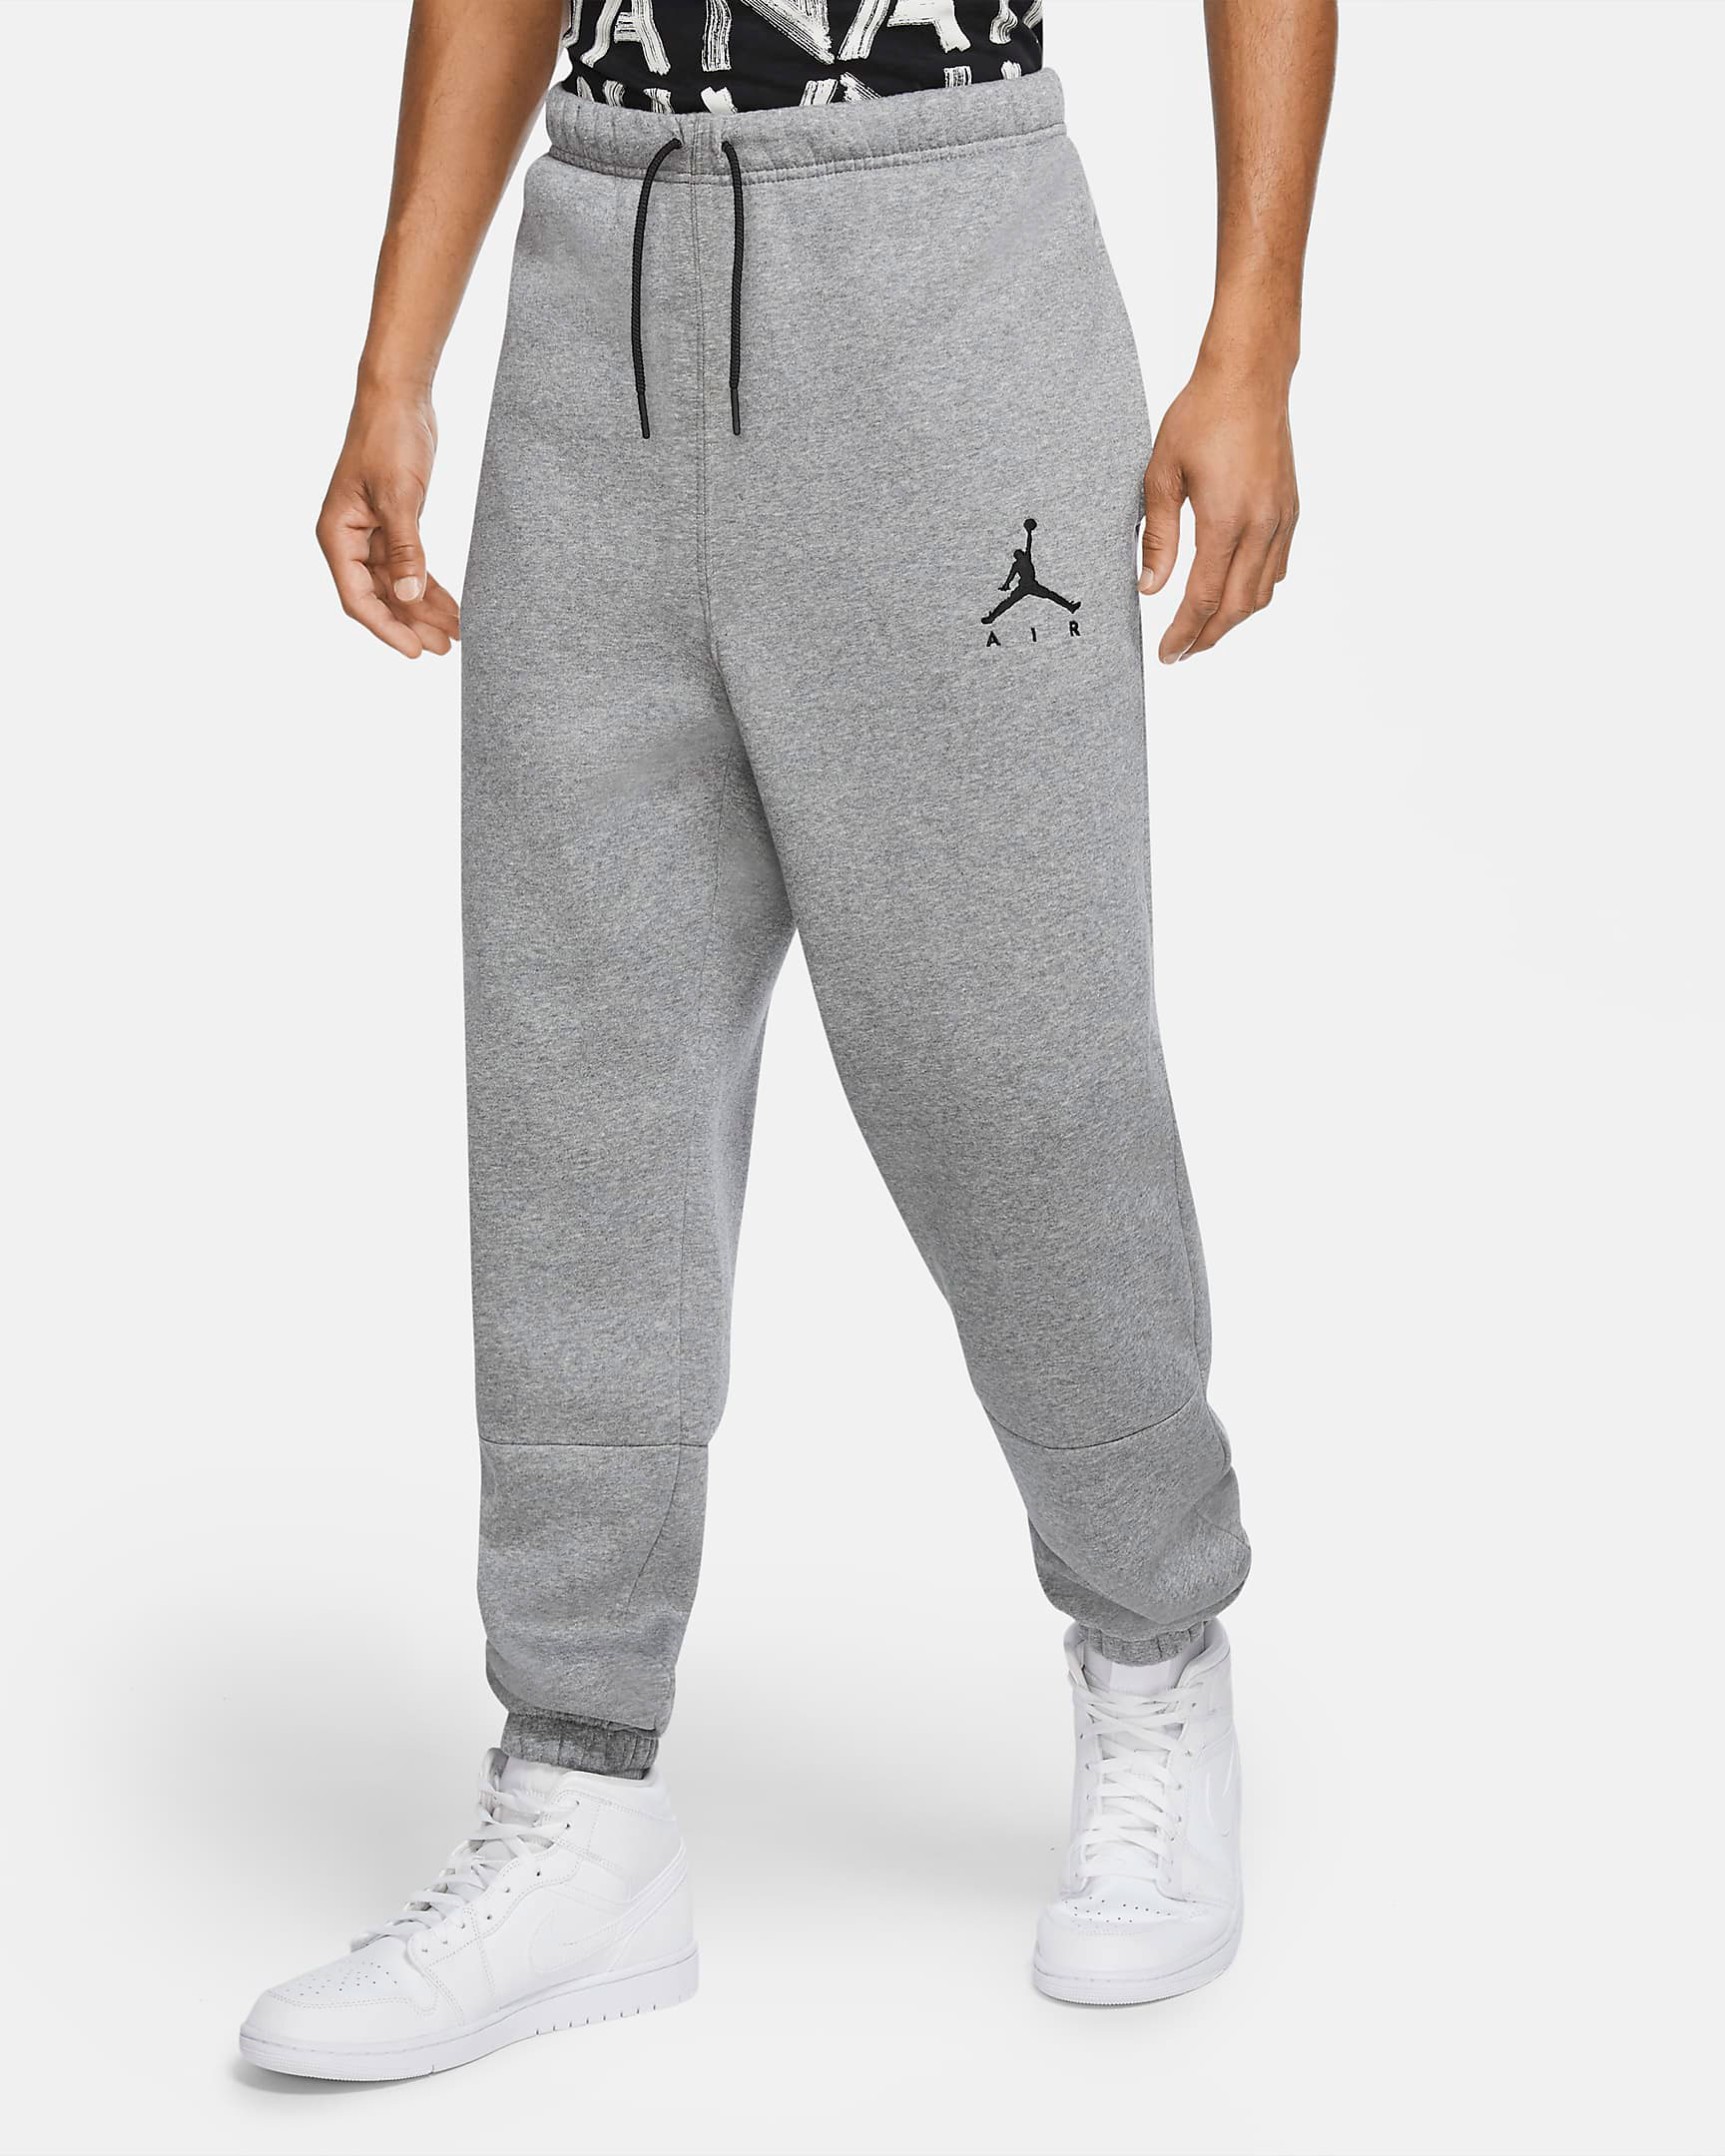 air-jordan-11-jubilee-grey-jogger-pants-match